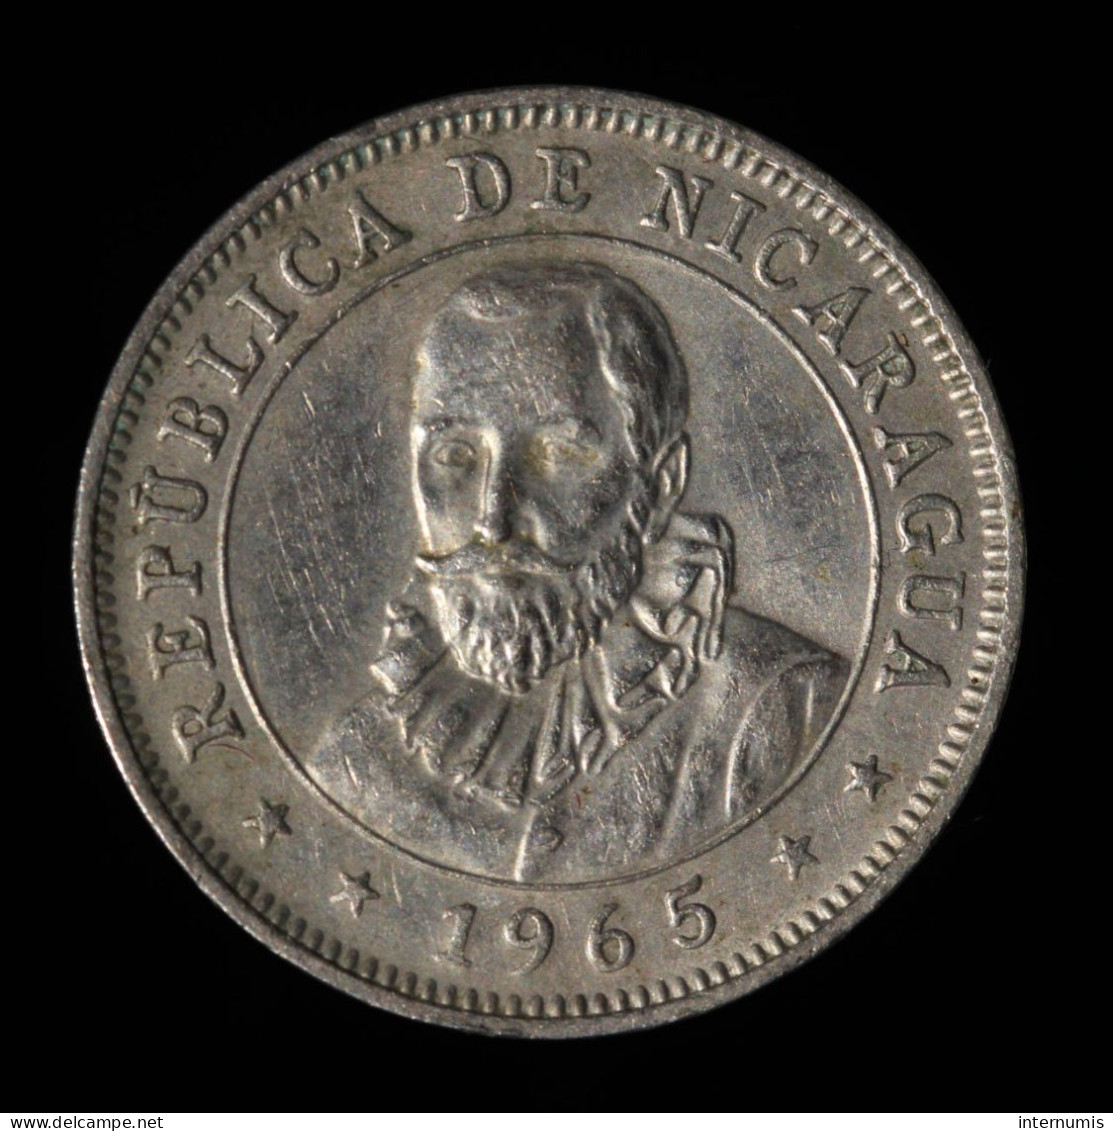  Nicaragua, , 10 Centavos, 1965, , Cu-N (Copper-Nickel), TTB+ (AU),
KM#17.2 - Nicaragua